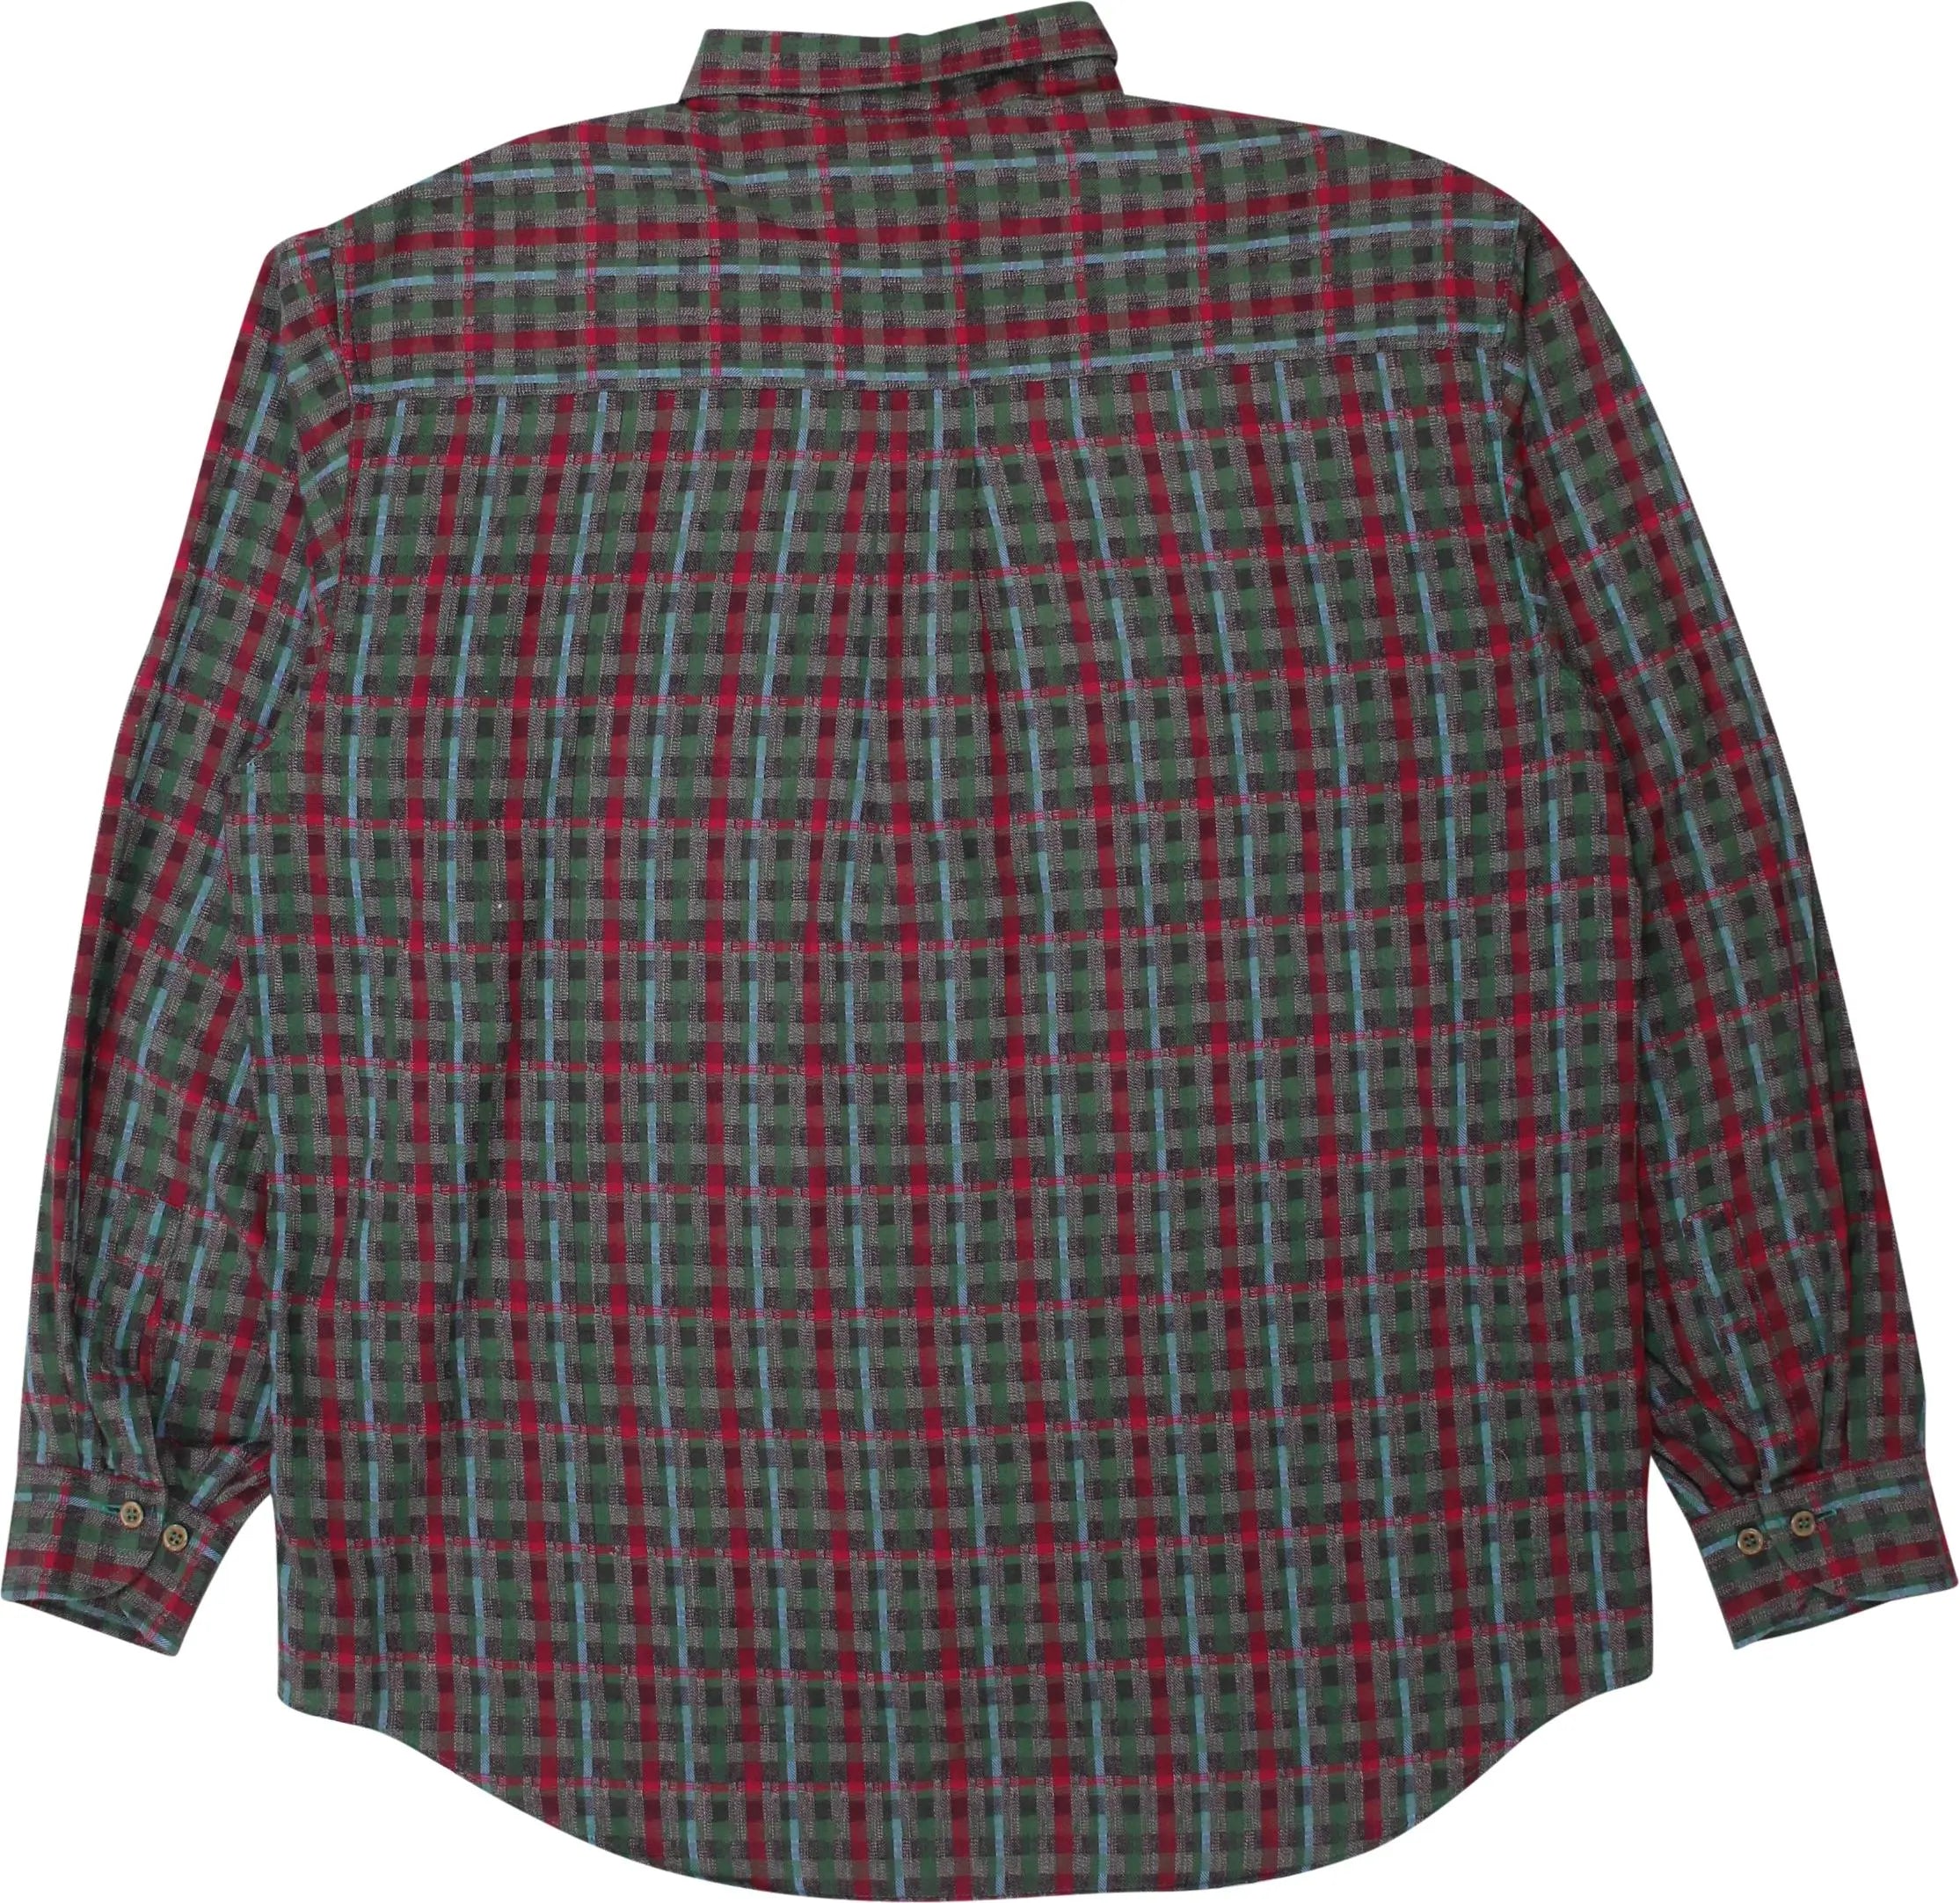 Daniël Schagen - 90s Checked Shirt- ThriftTale.com - Vintage and second handclothing